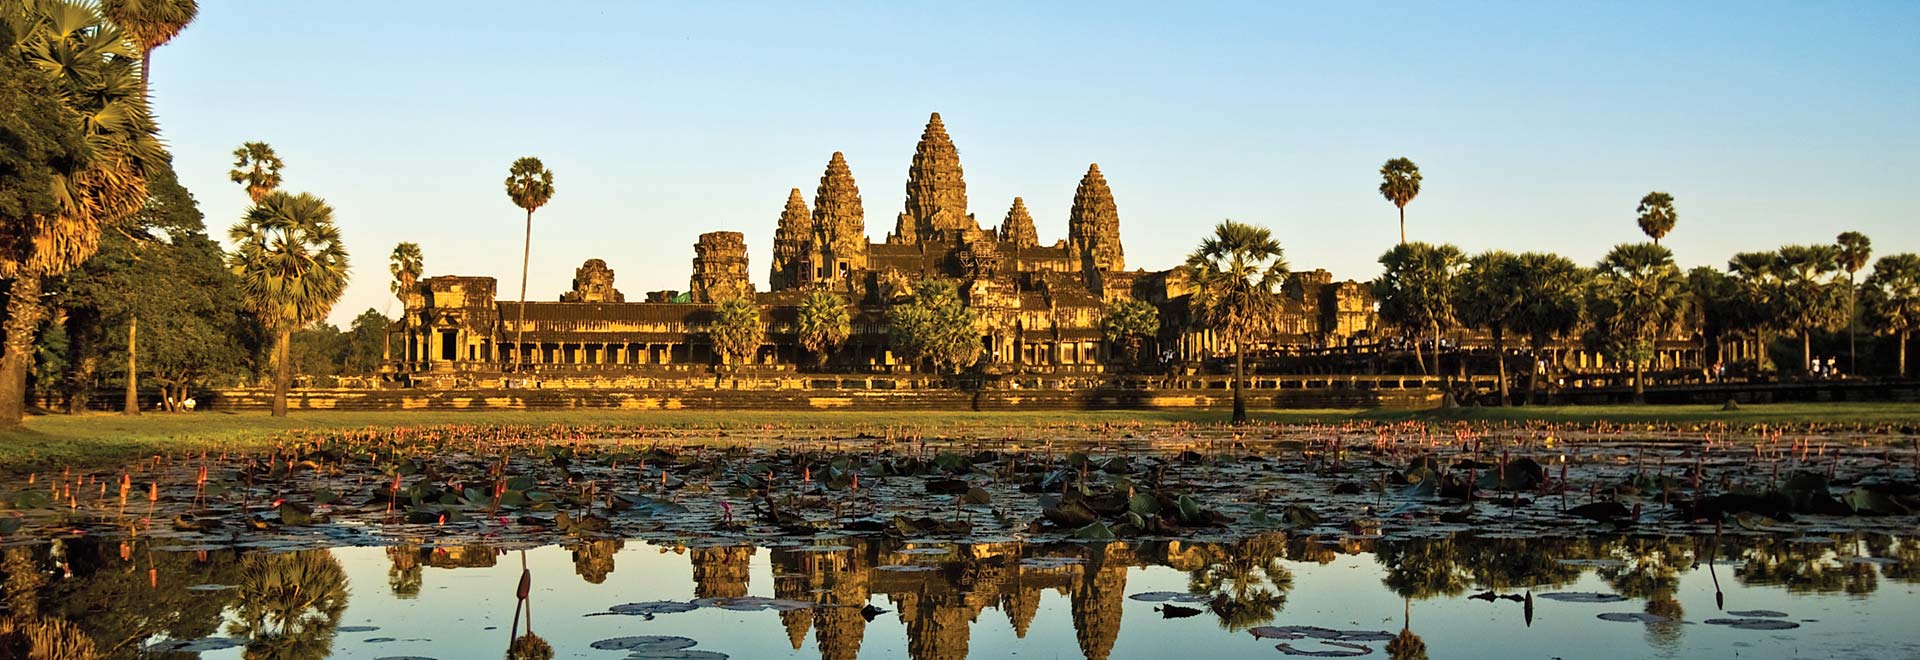 Asia Images Indochina Cambodia Angkor Wat MH